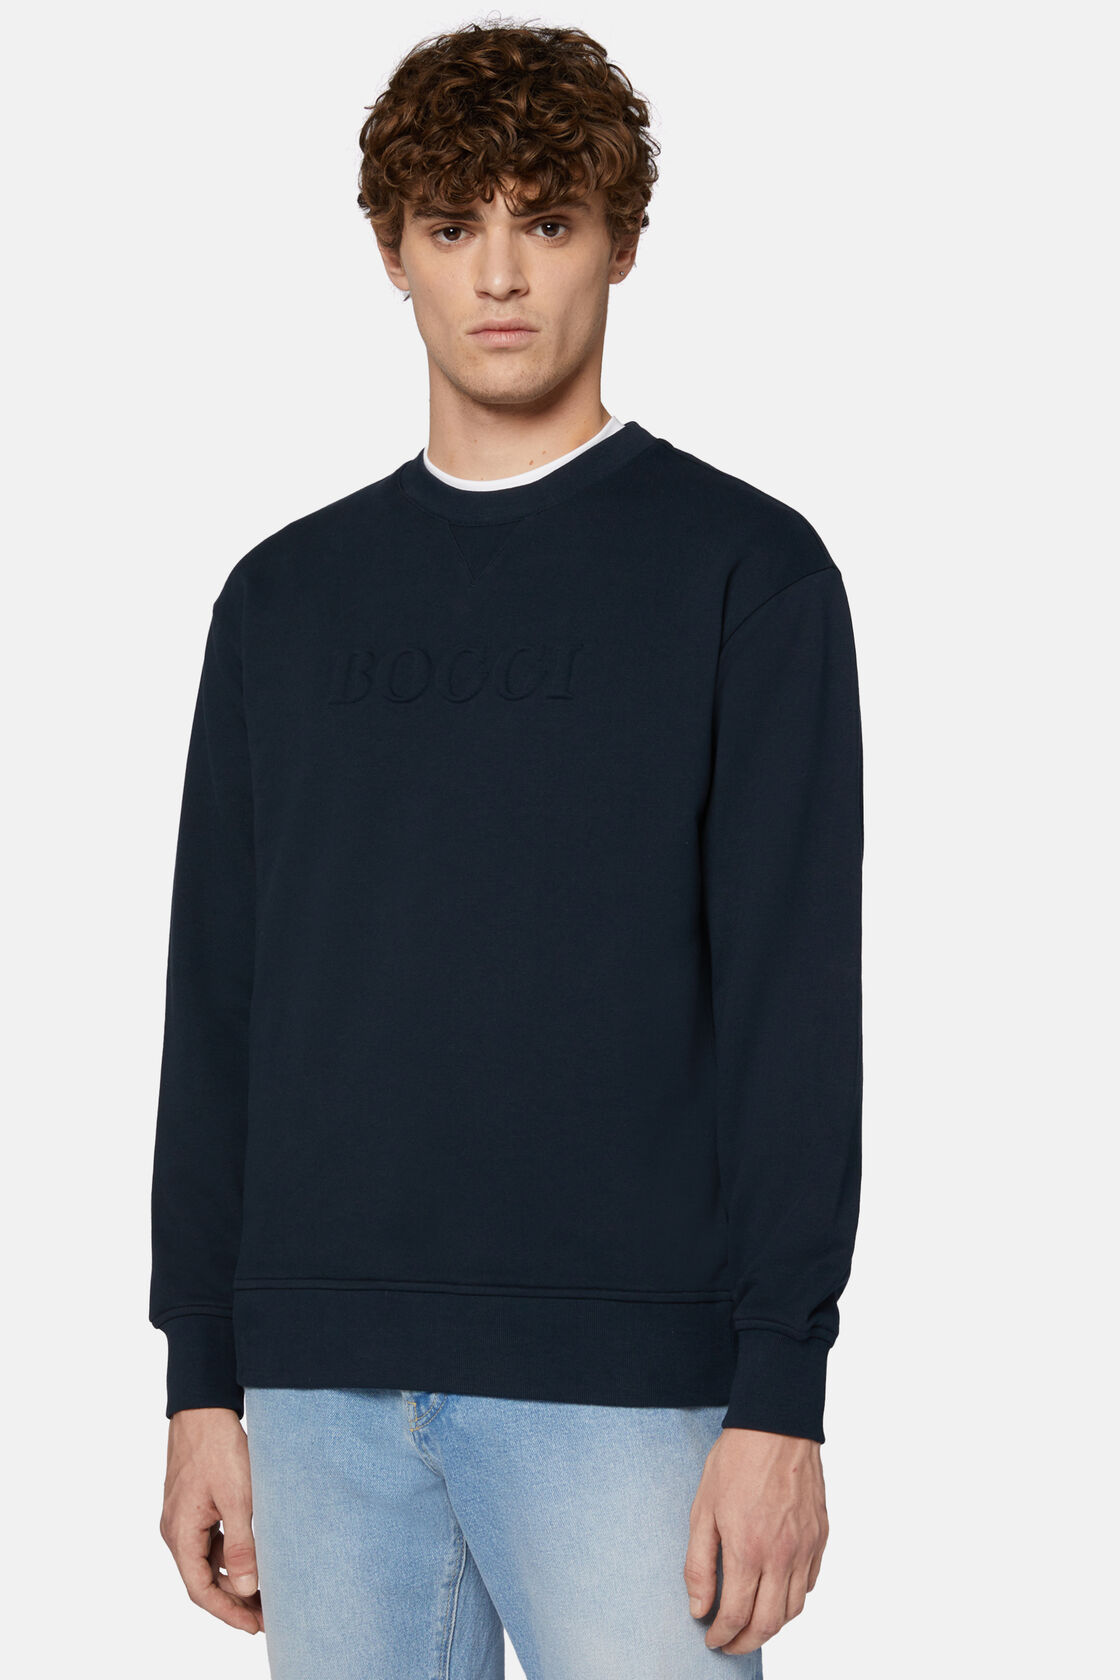 Sweatshirt de algodão com gola redonda, Navy blue, hi-res